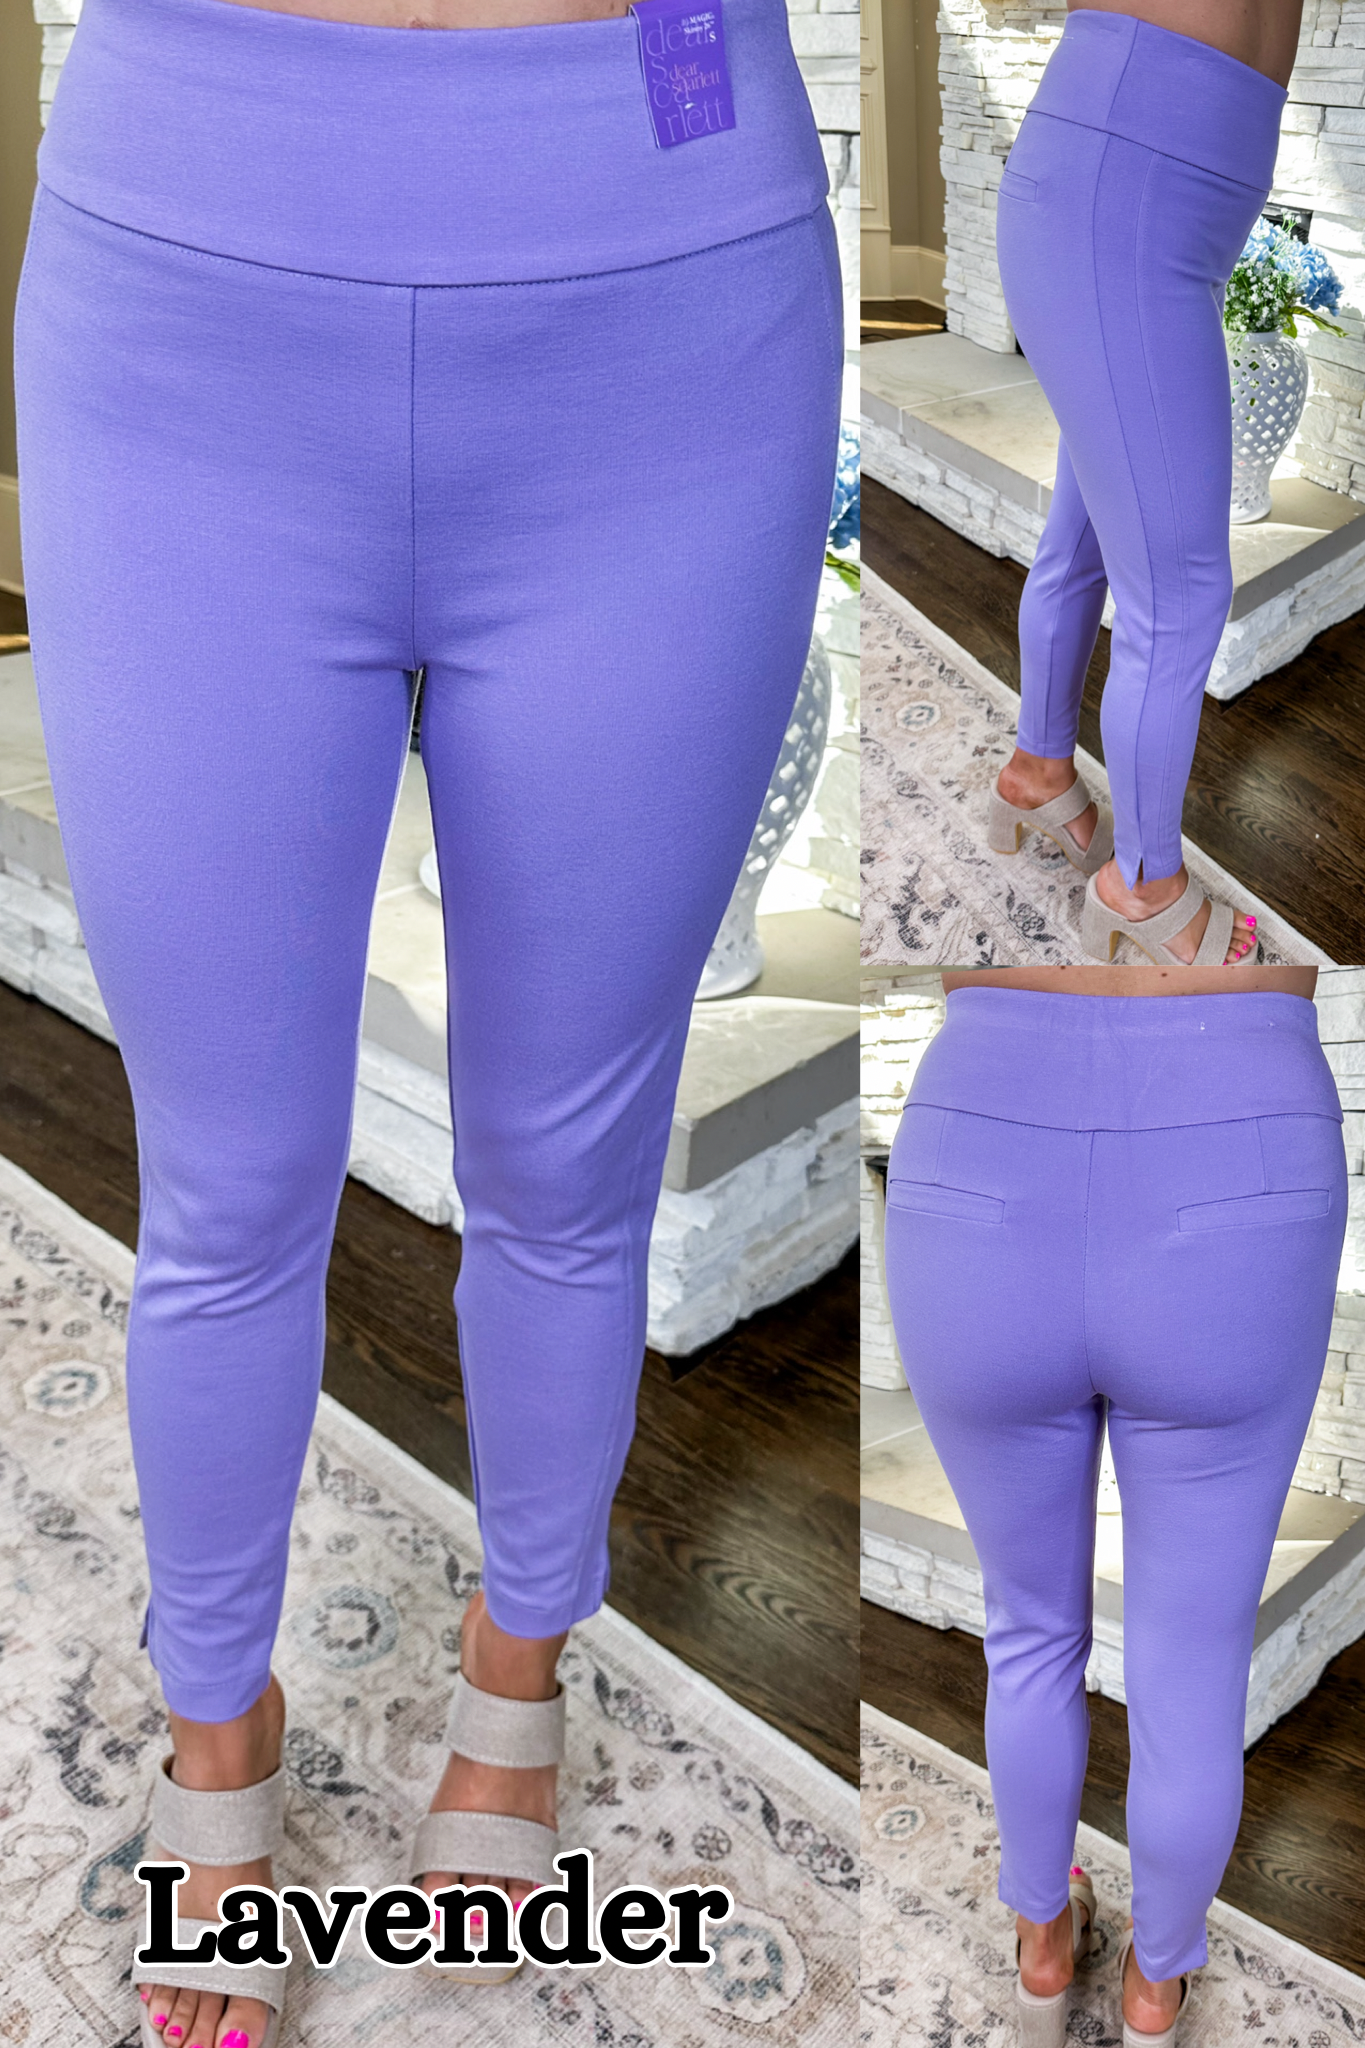 Bodyshape leggings curvy in dark purple, 11.99€